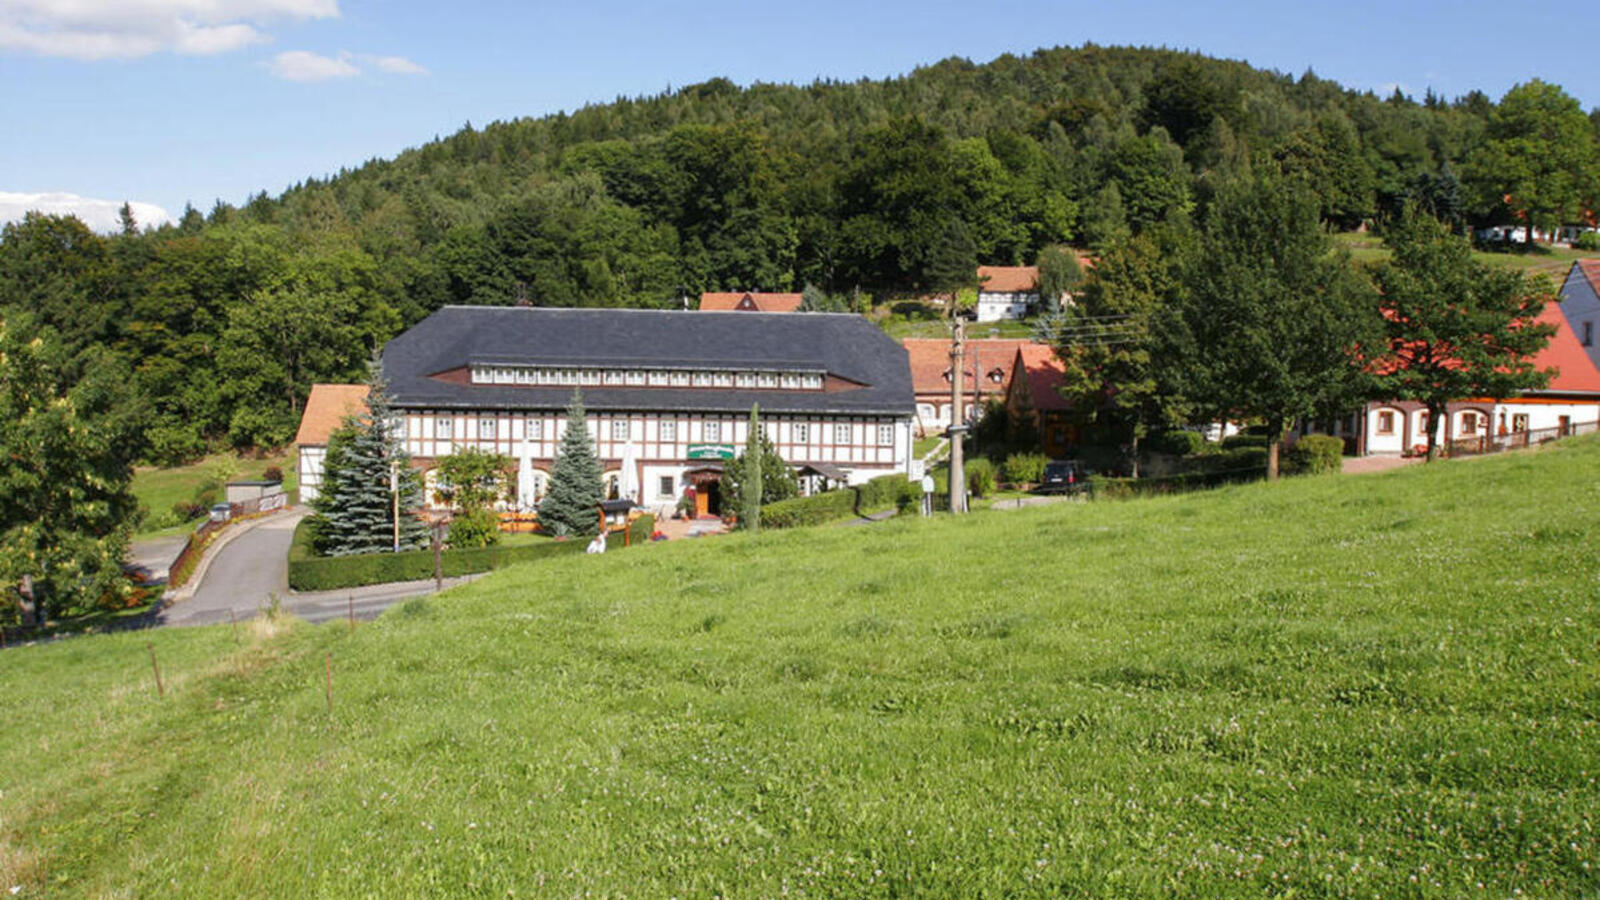 Ringhotel Sonnebergbaude in Waltersdorf, Hotel in the Oberlausitz region